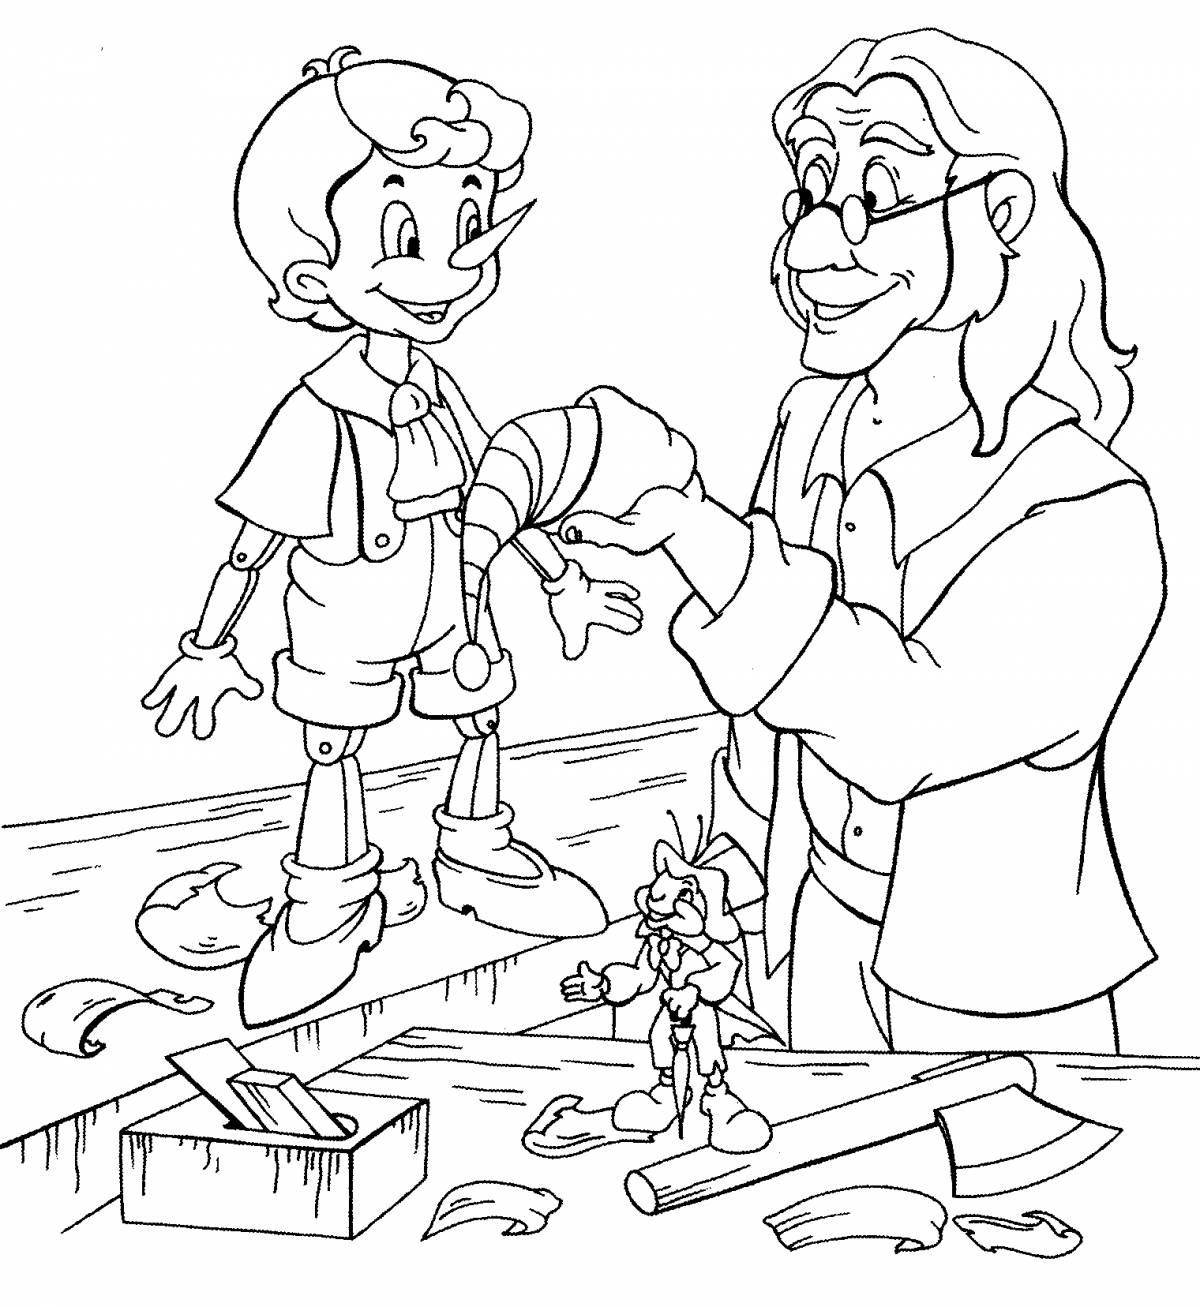 Pinocchio and Malvina #2